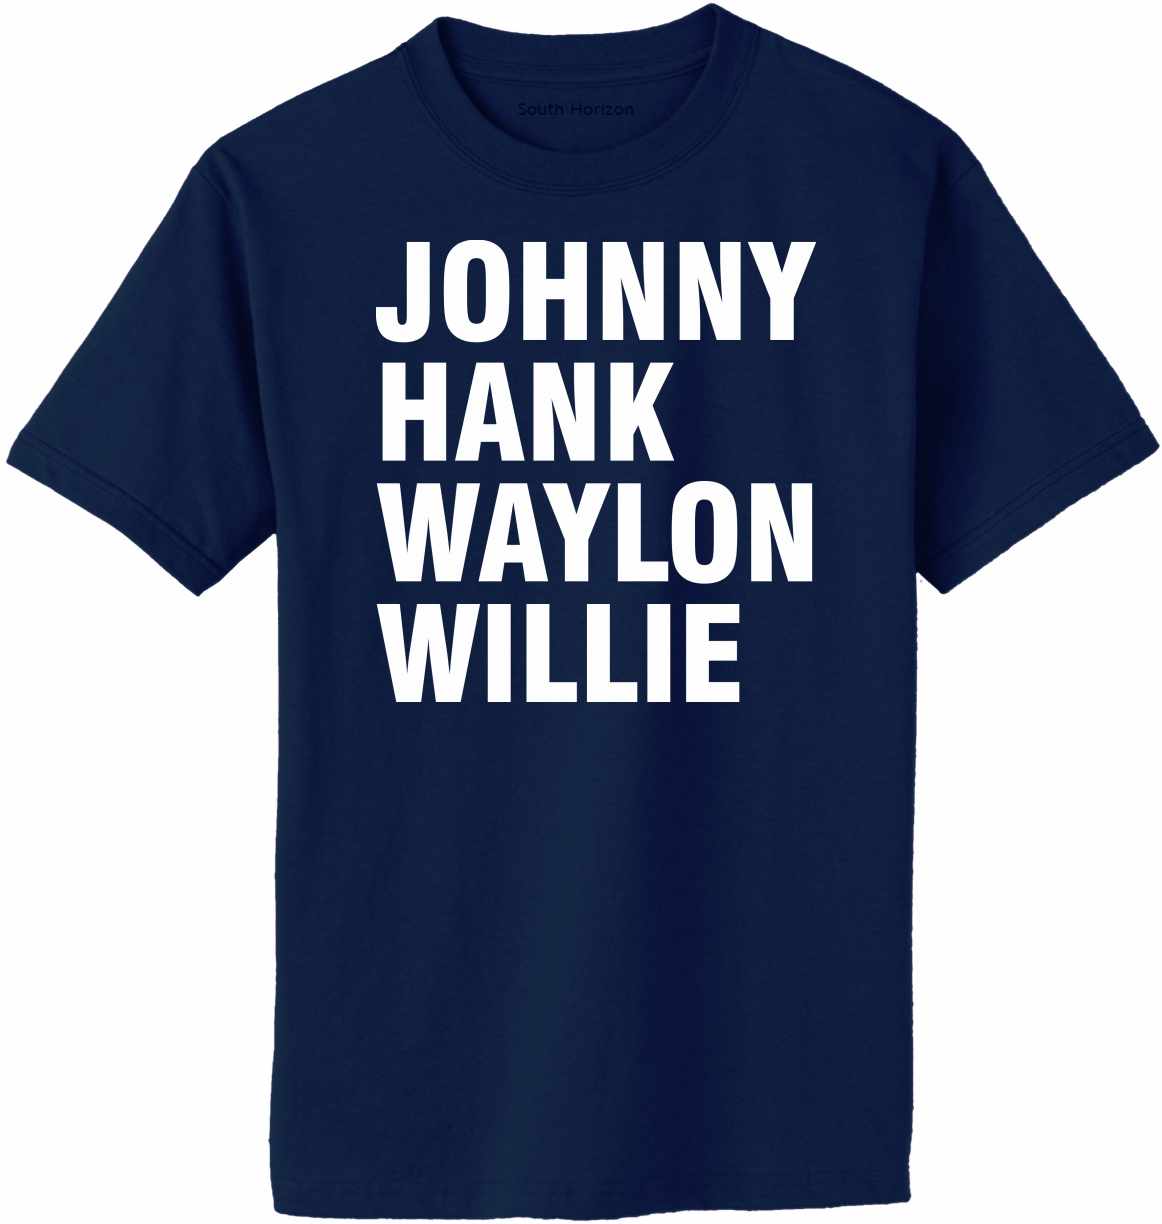 JOHNNY HANK WAYLON WILLIE on Adult T-Shirt (#1229-1)